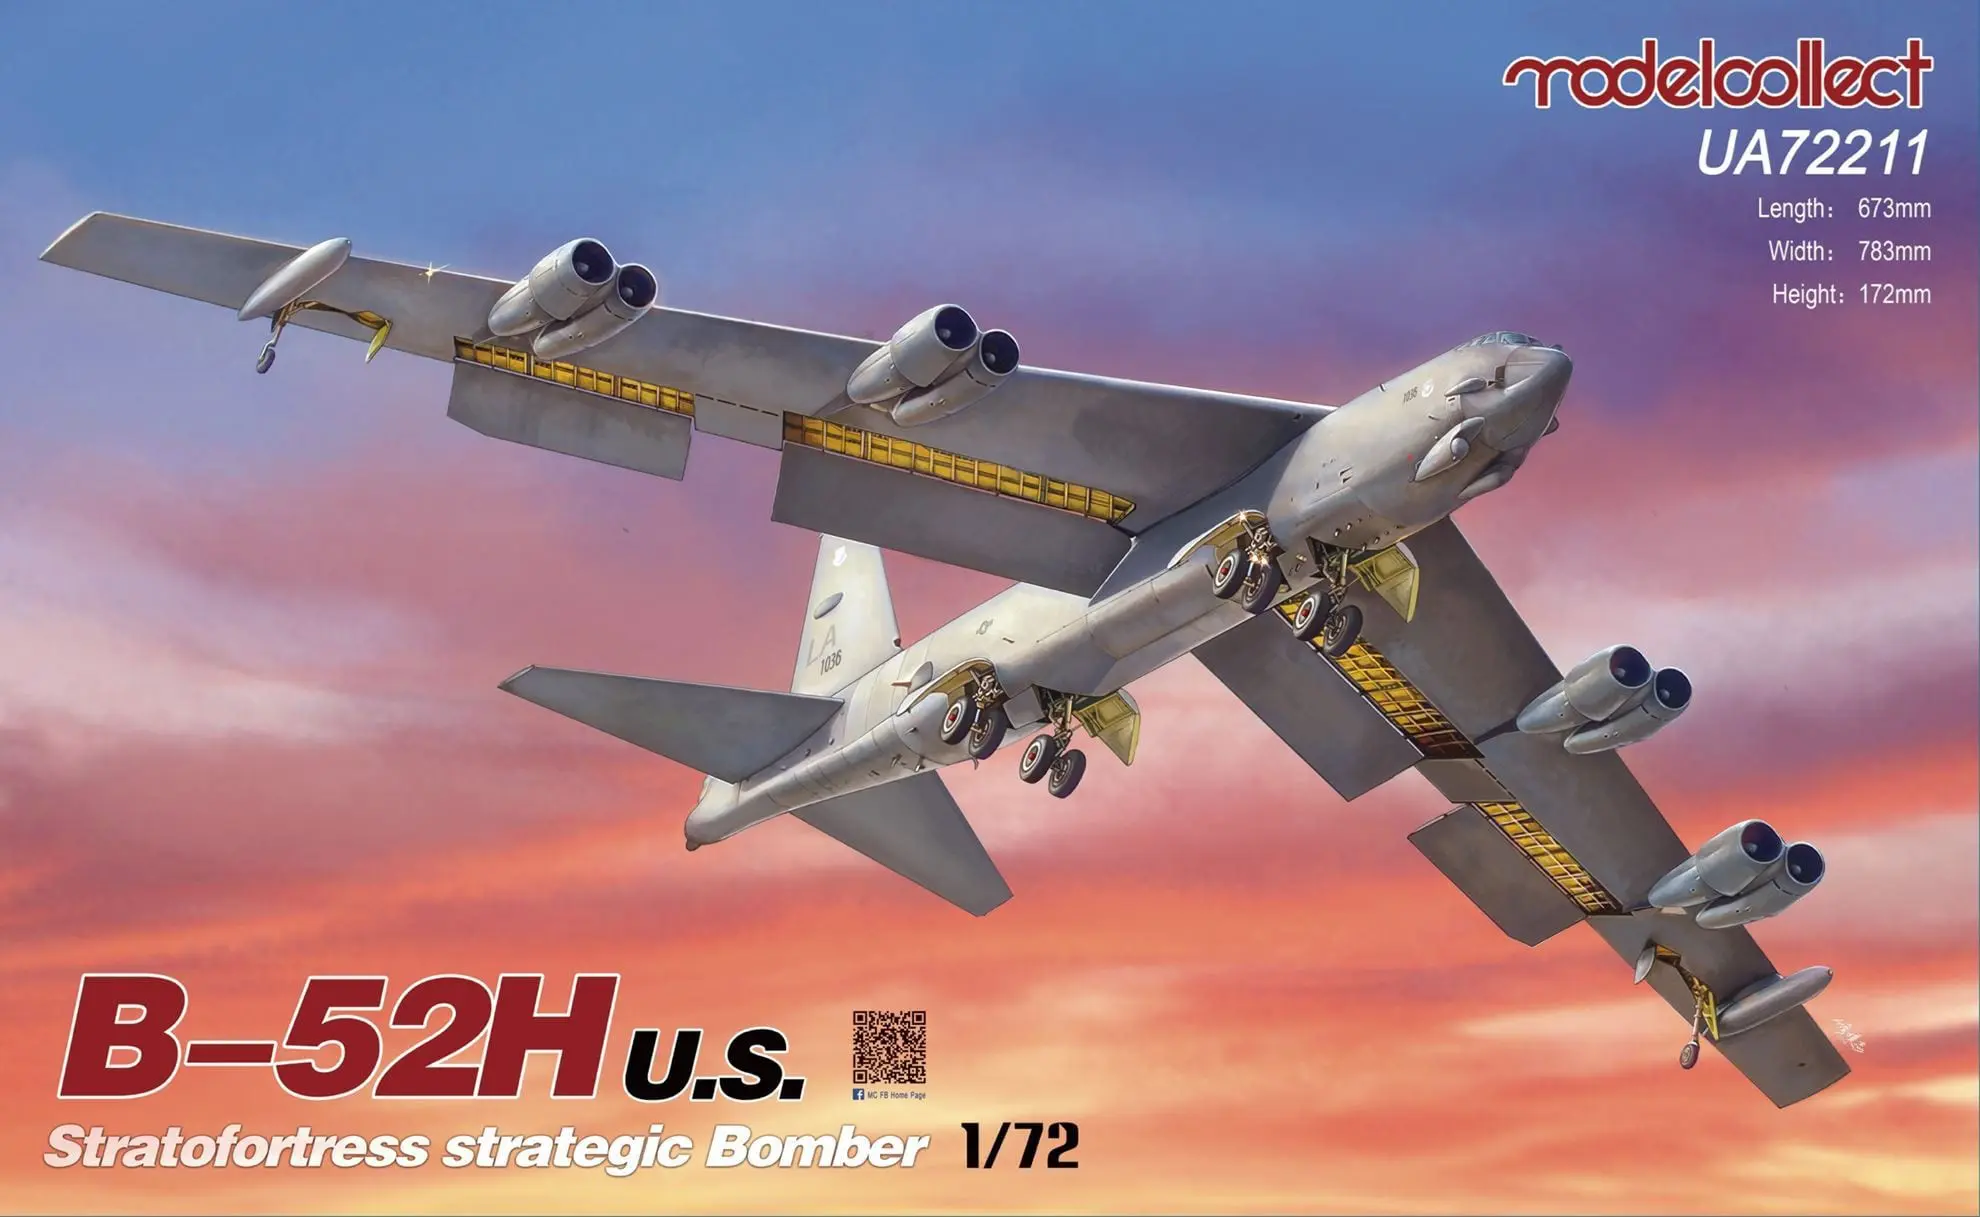 ModelCollect - UA72211 (Old UA72200) - B-52H U.S. Stratofortress strategic  Bomber - 1/72 Scale Model